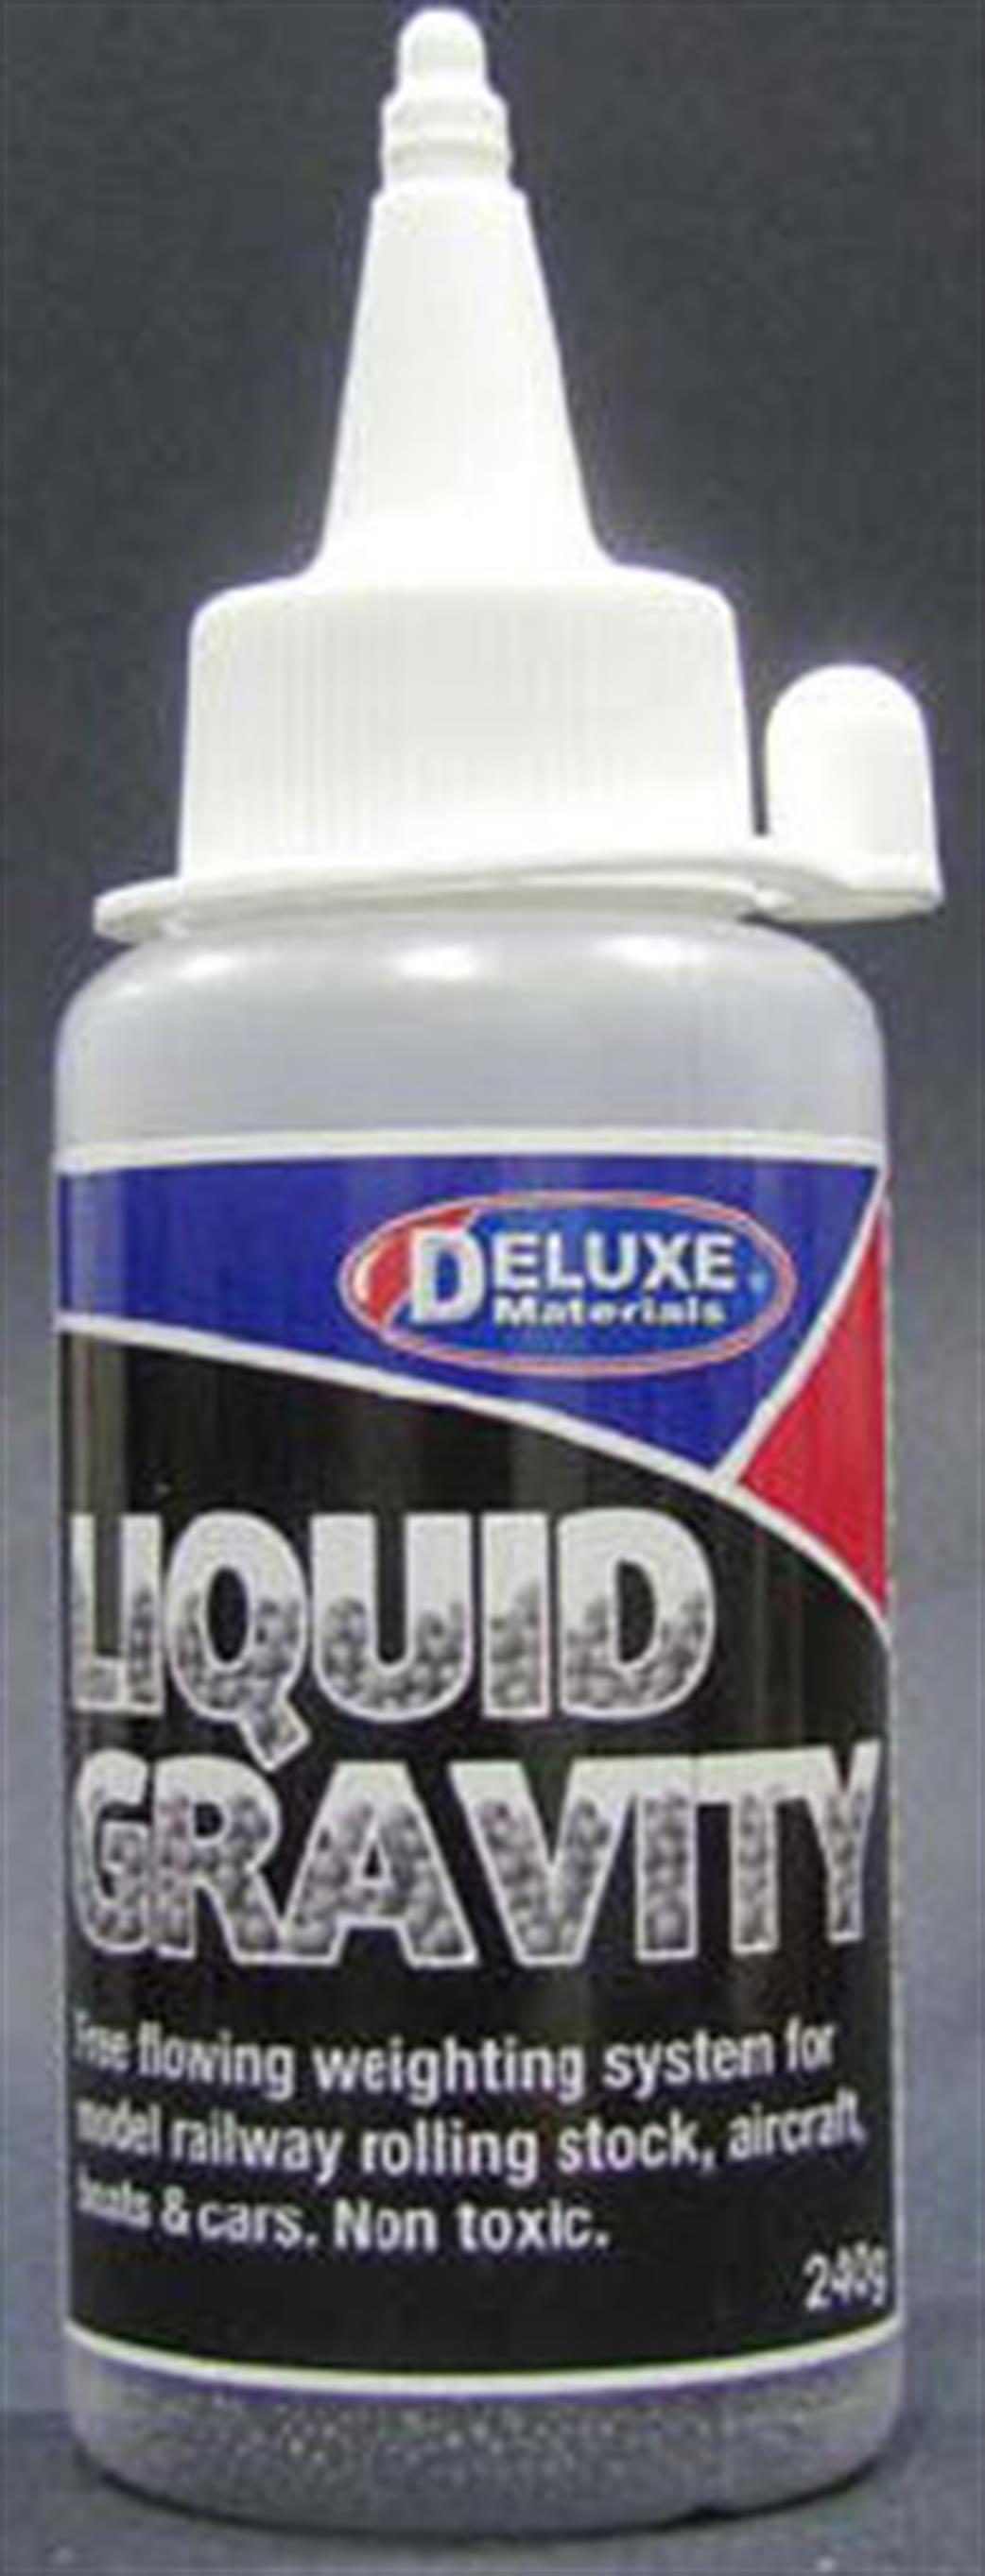 Deluxe Materials BD38 Liquid Gravity 240g